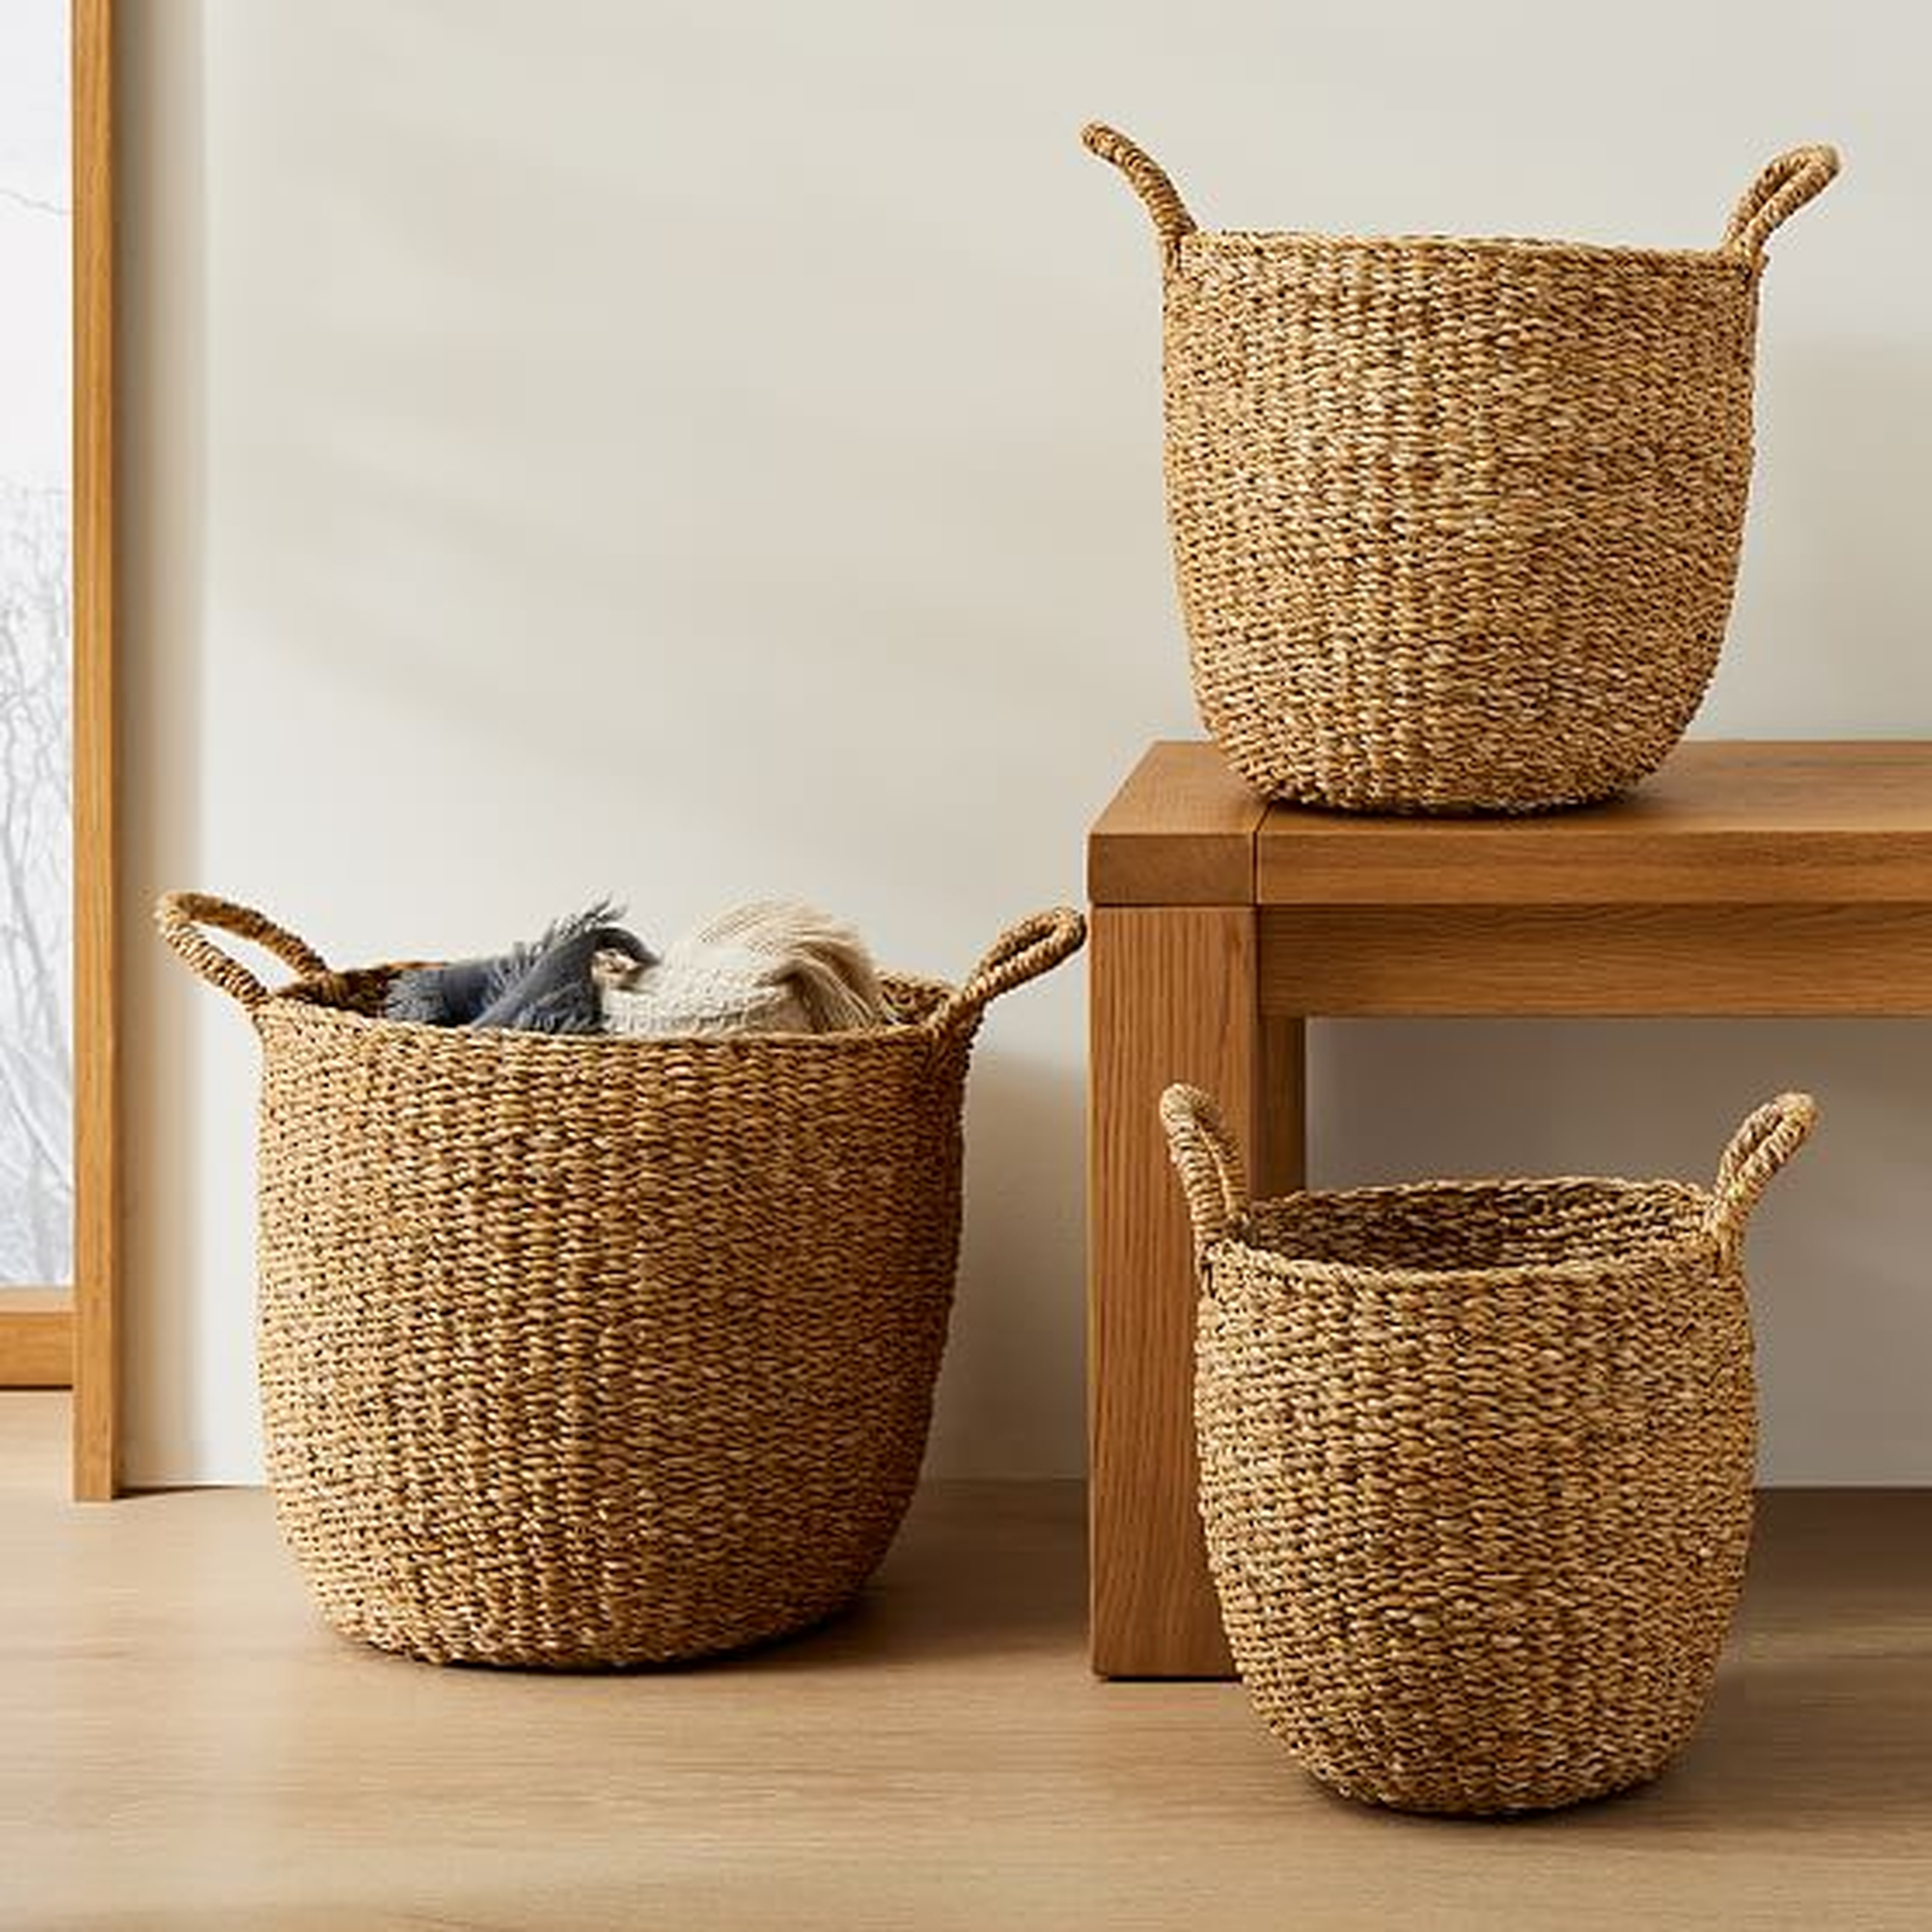 Cece Woven Nesting Baskets, Natural, (Set of 3) - West Elm